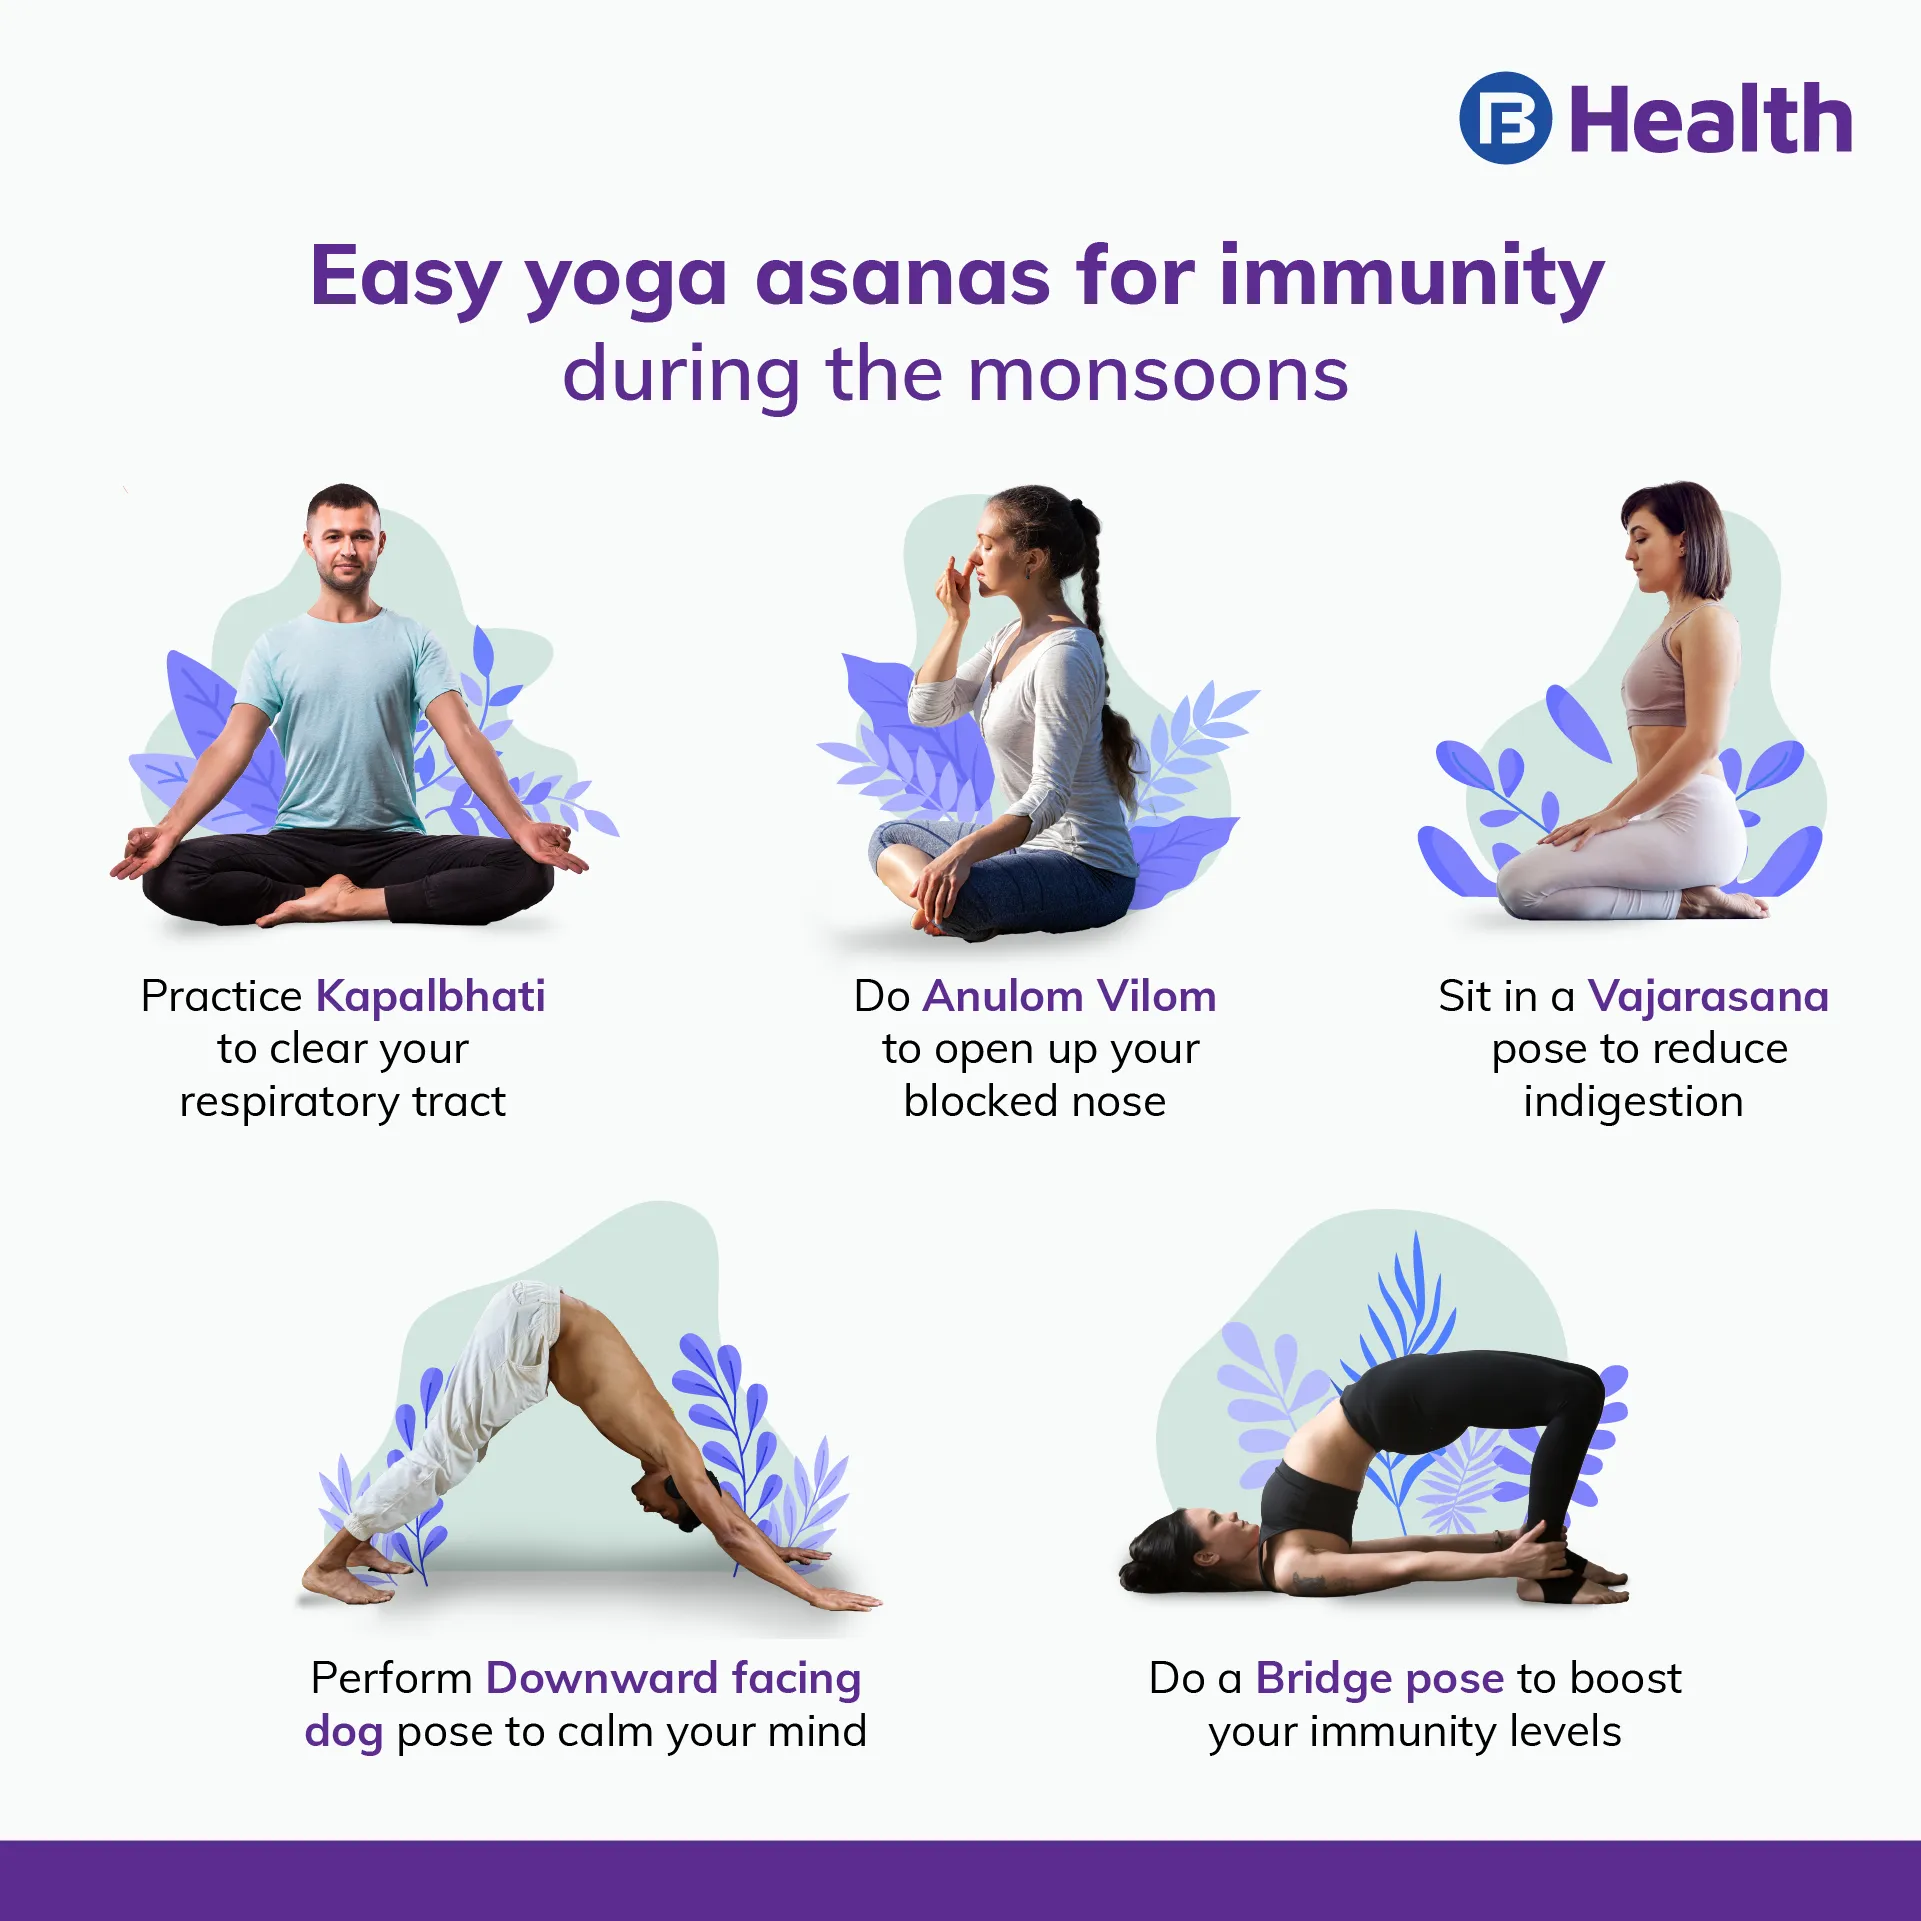 How To Avoid Skin Damage in Winter Season by Yoga by 7pranayama - Issuu